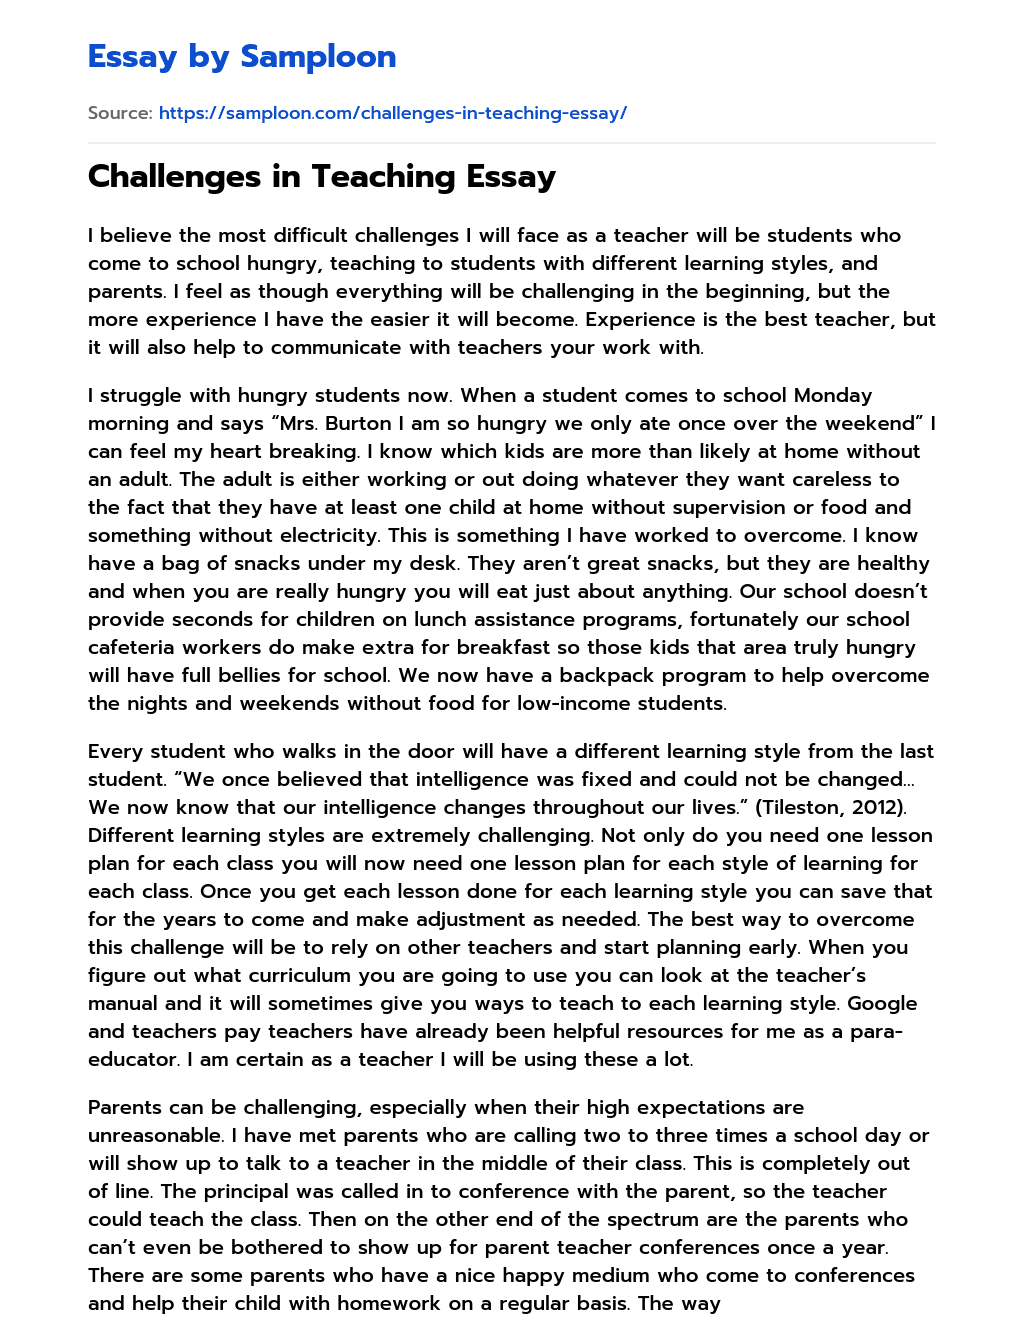 Challenges in Teaching Essay essay